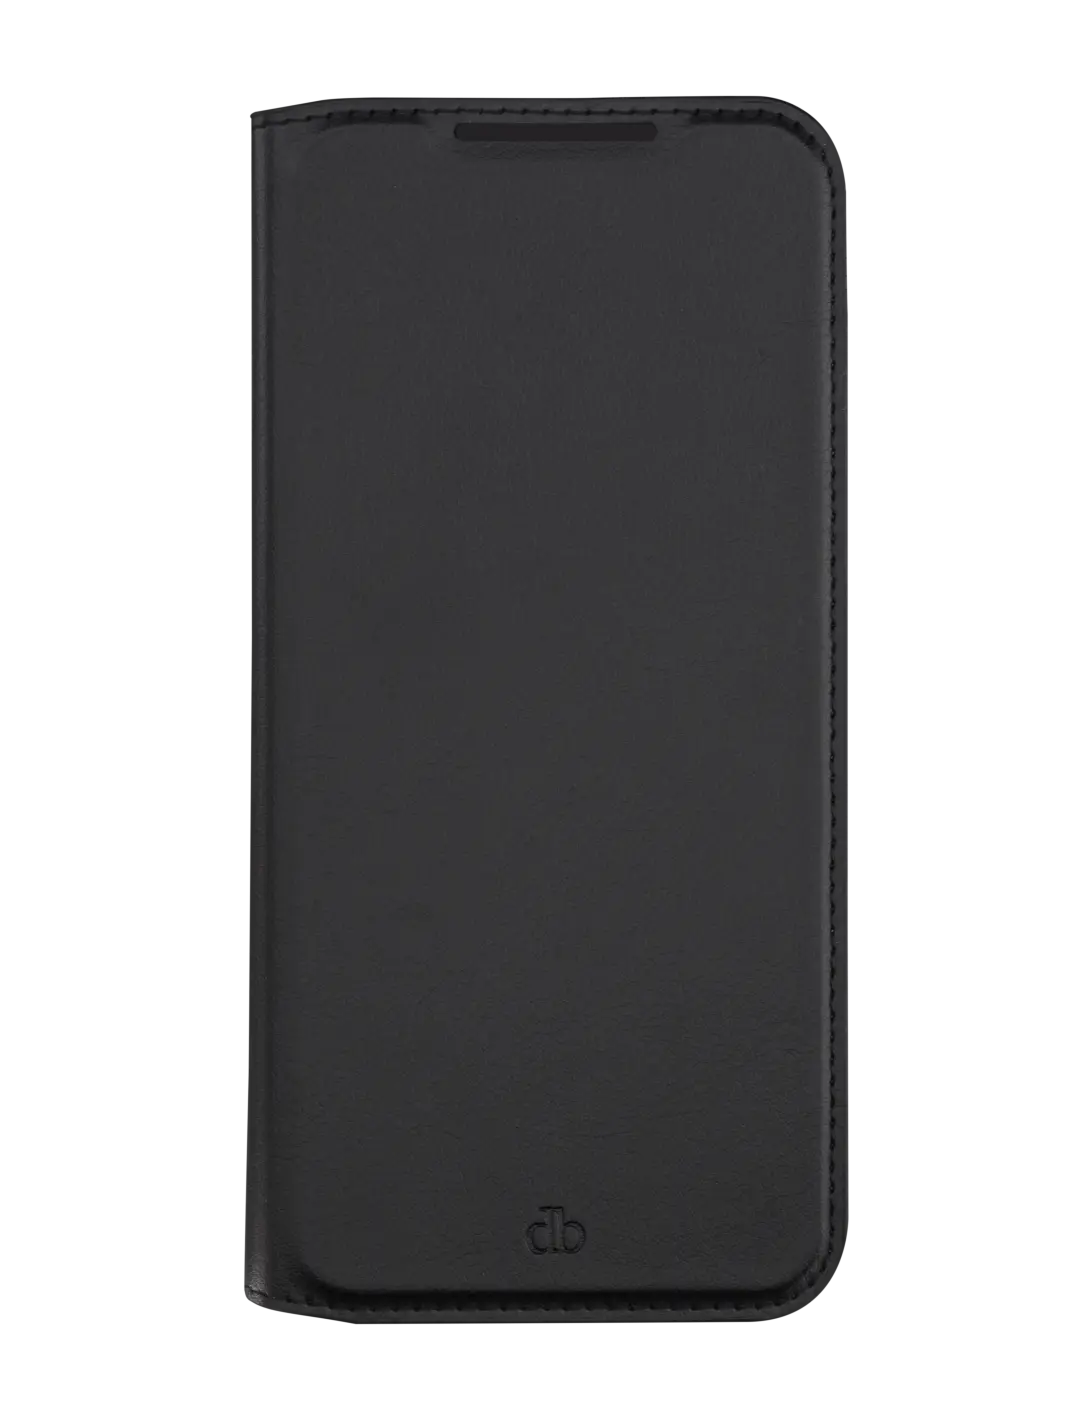 Oslo Black Galaxy A13 Phone Cases